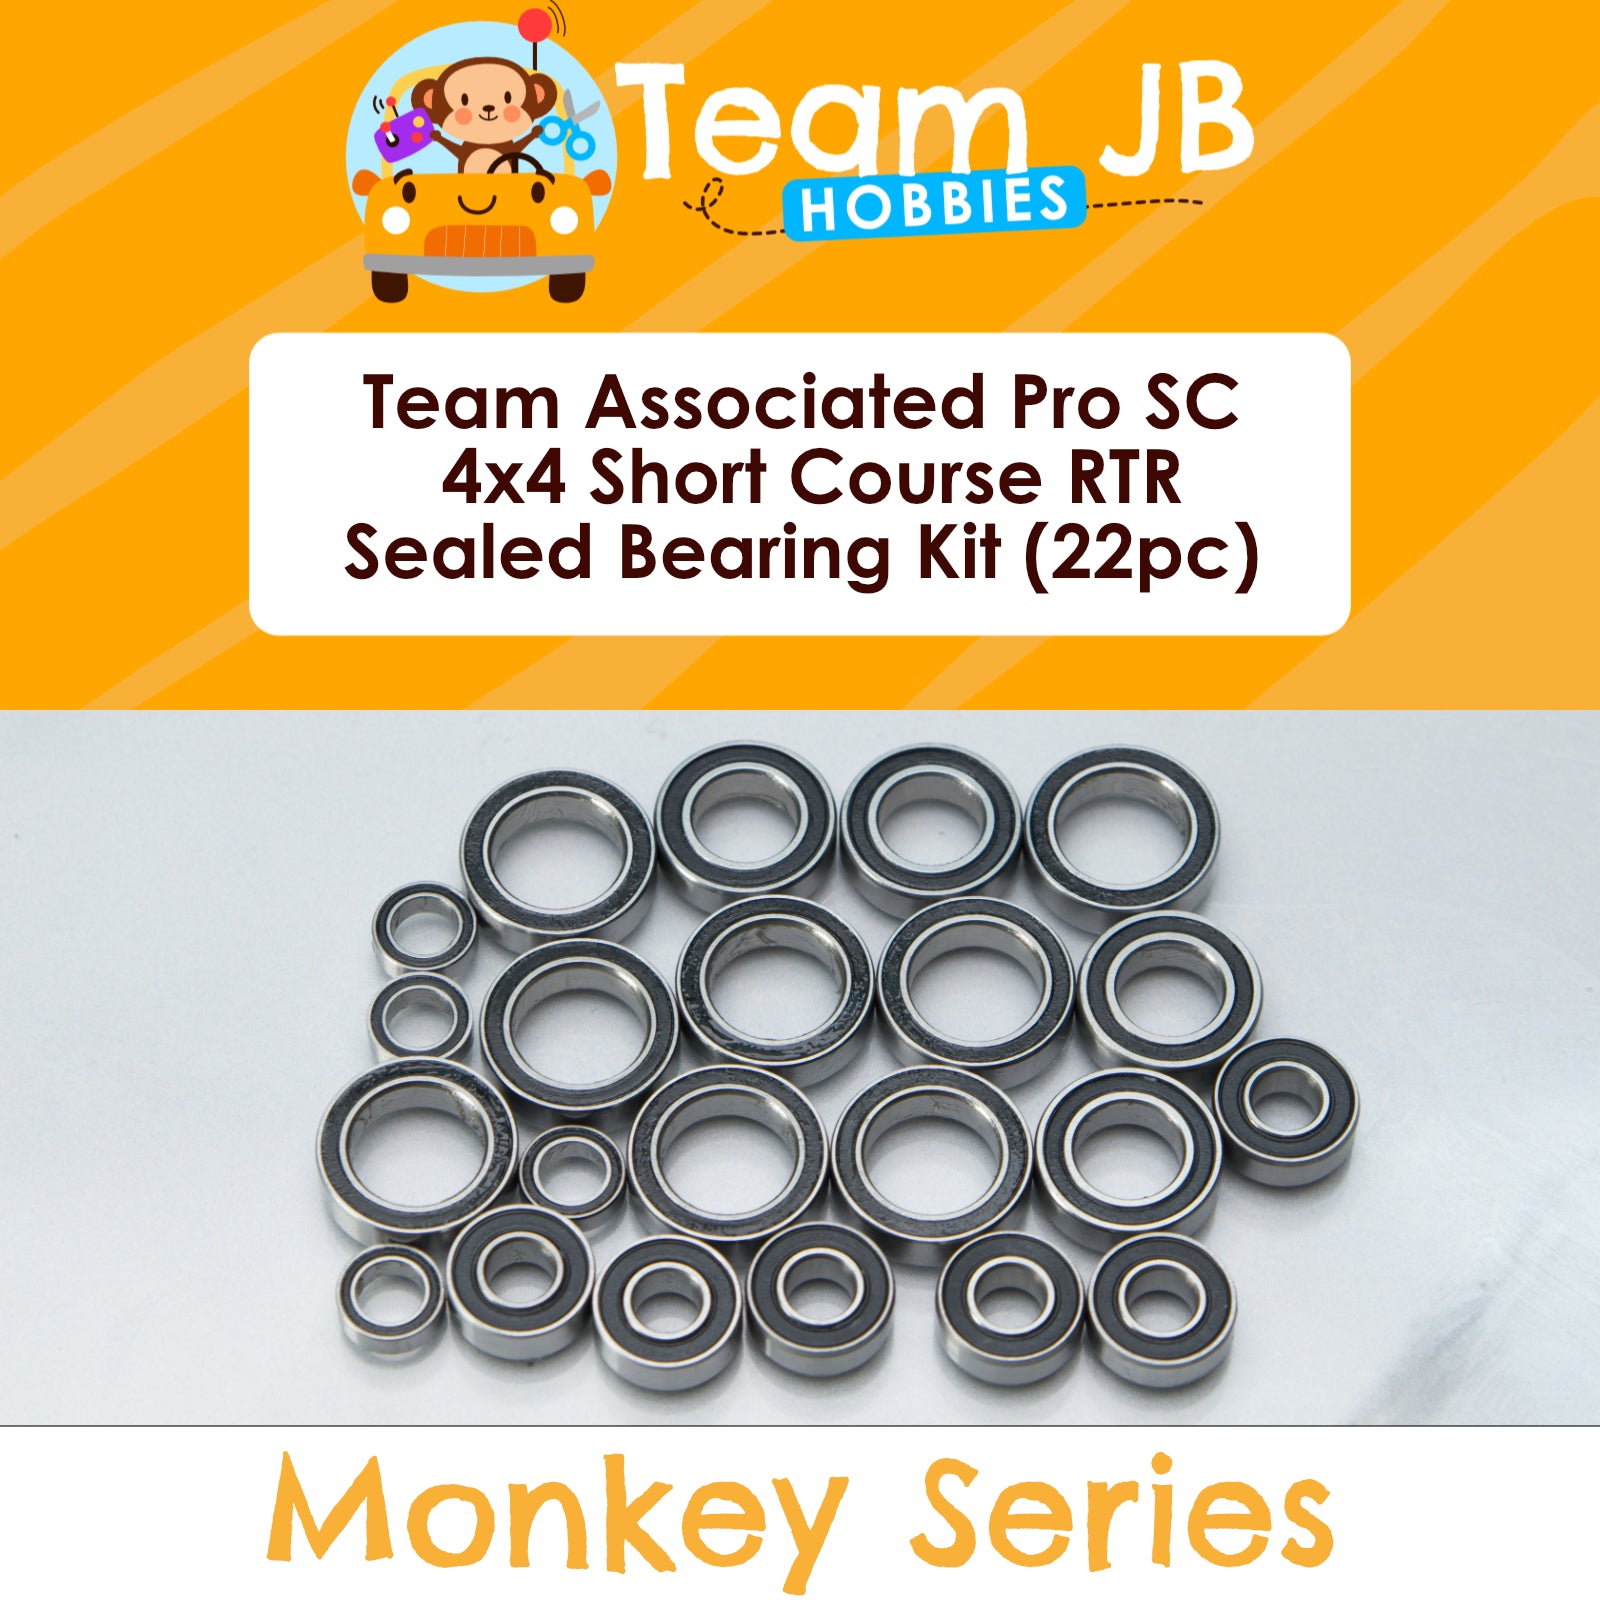 Team Associated Pro SC 4x4 Short Course RTR - Sealed Bearing Kit